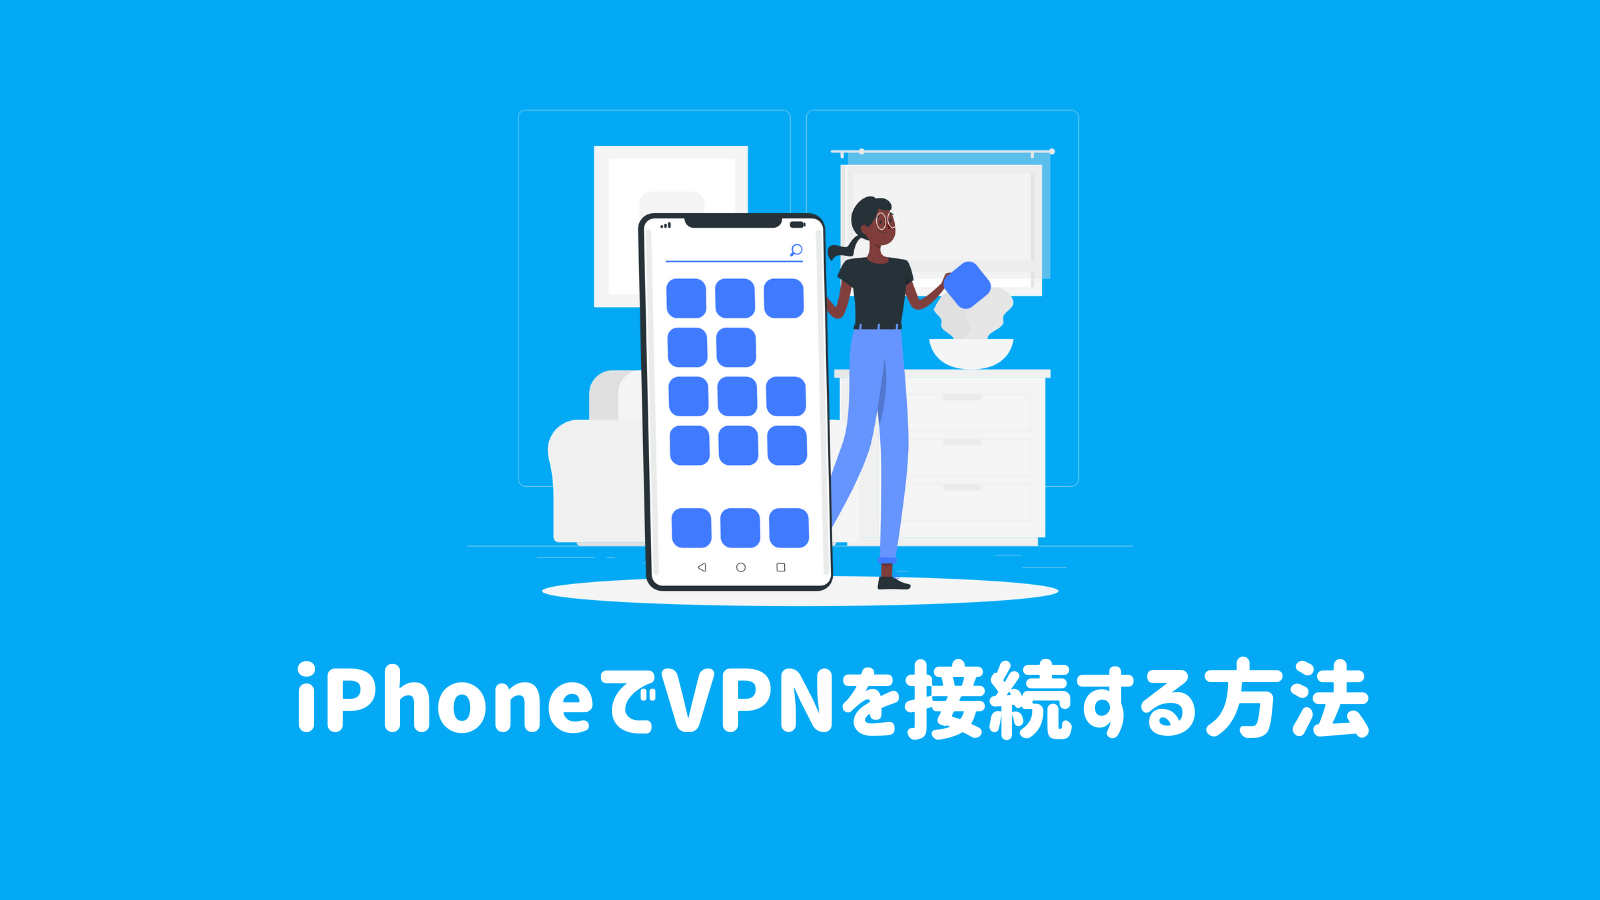 iPhoneでVPNを接続する方法【画像解説付き】